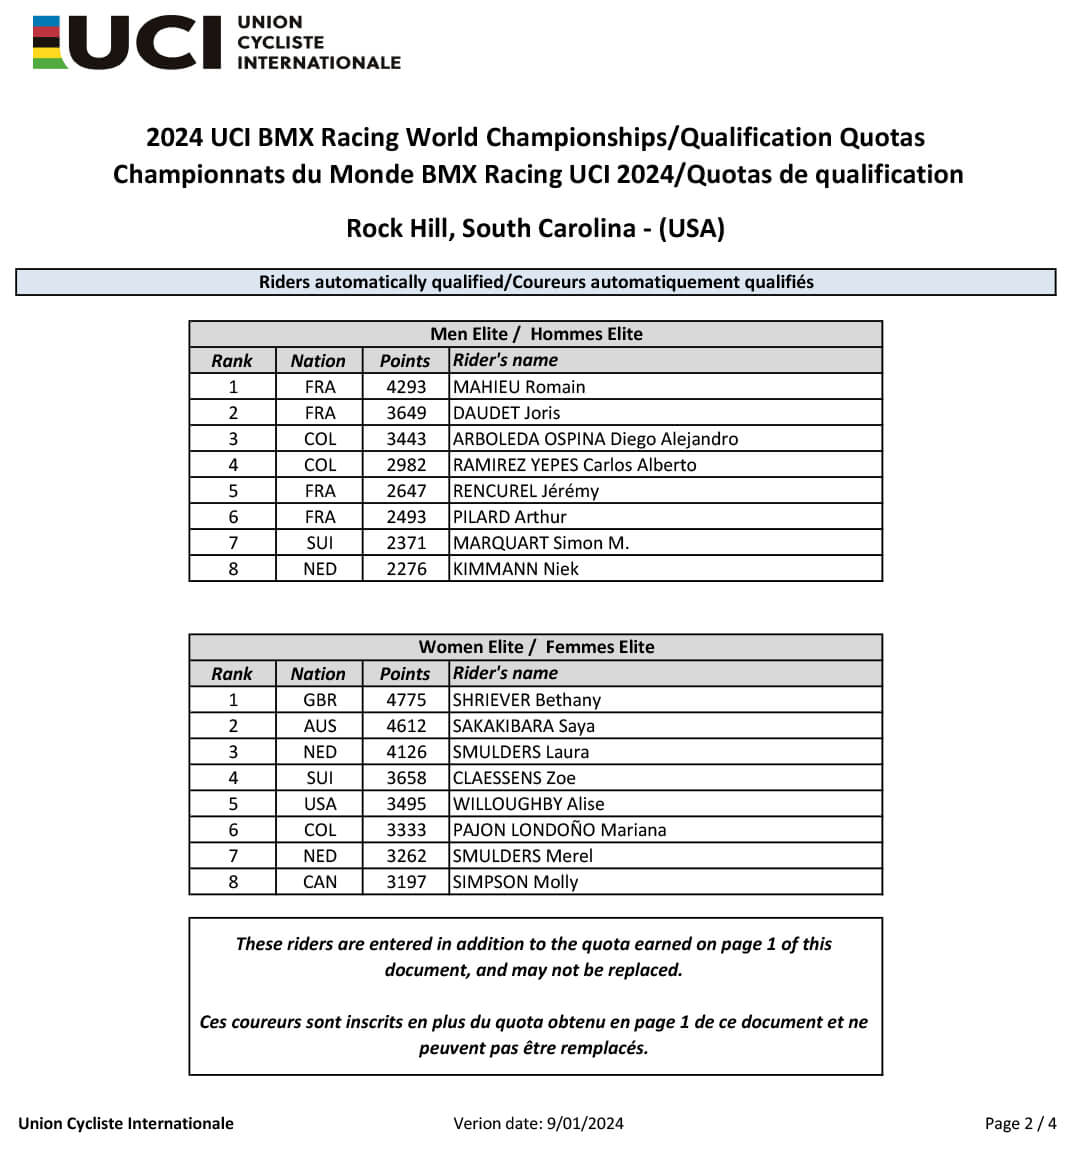 2024 UCI BMX Racing World Championships - Championship Category Rider Quota P2